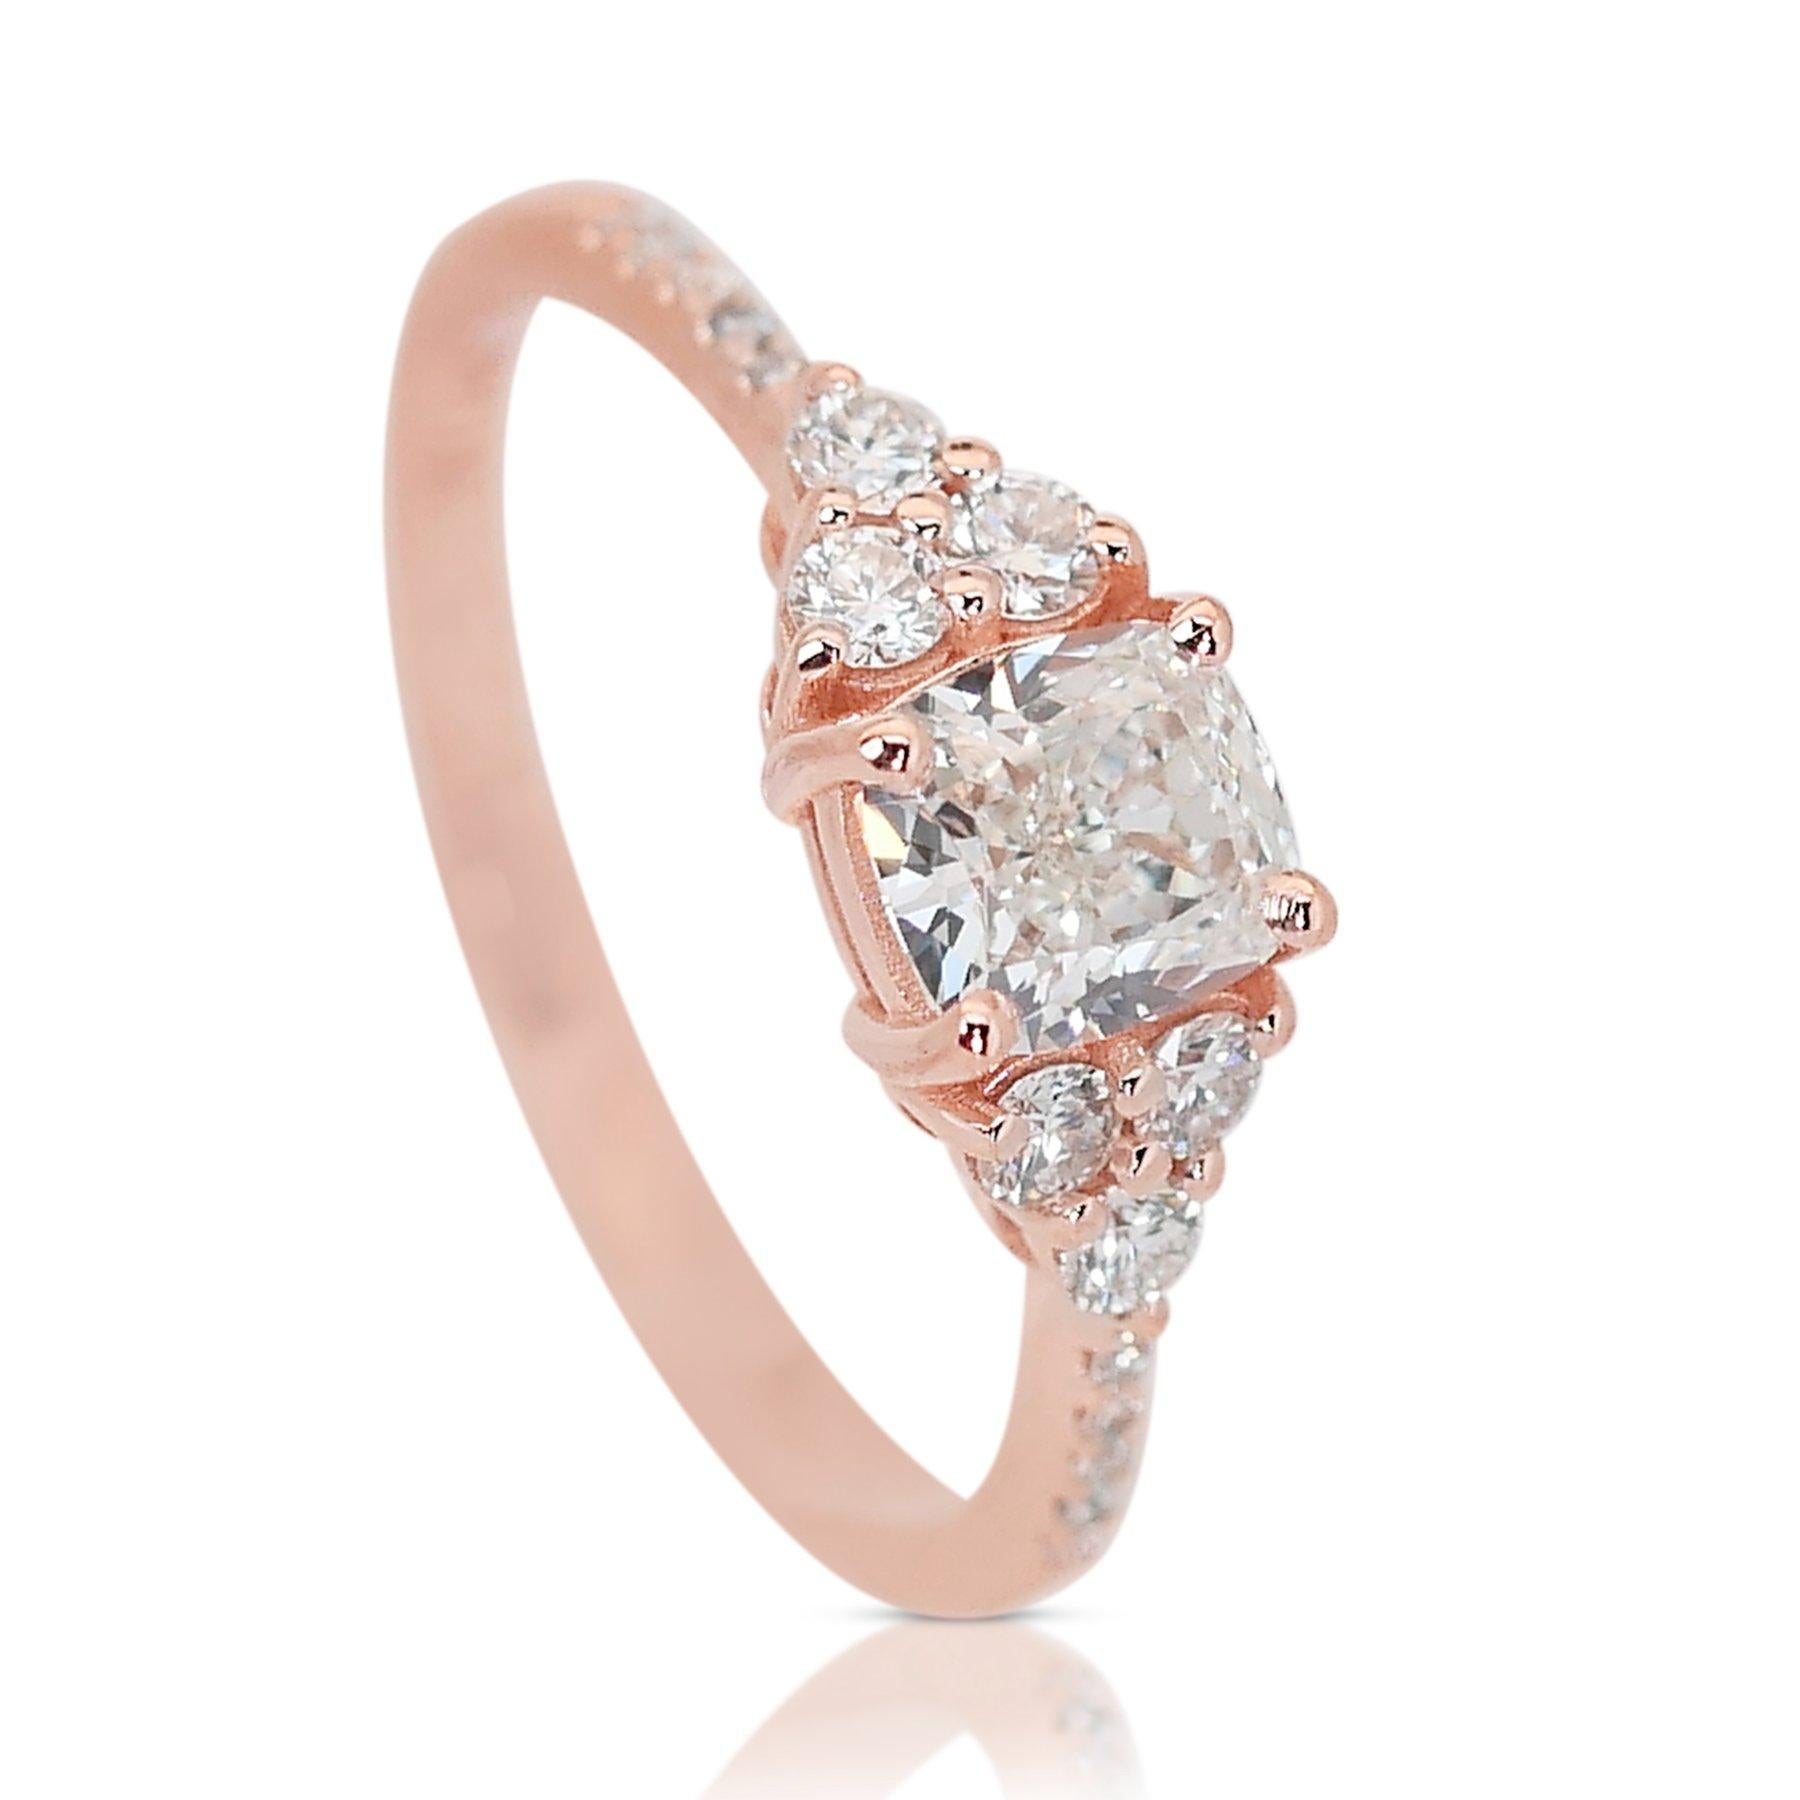 Cushion Cut Enchanting 1.29ct Diamond Pave Ring in 18k Rose Gold - GIA Certified